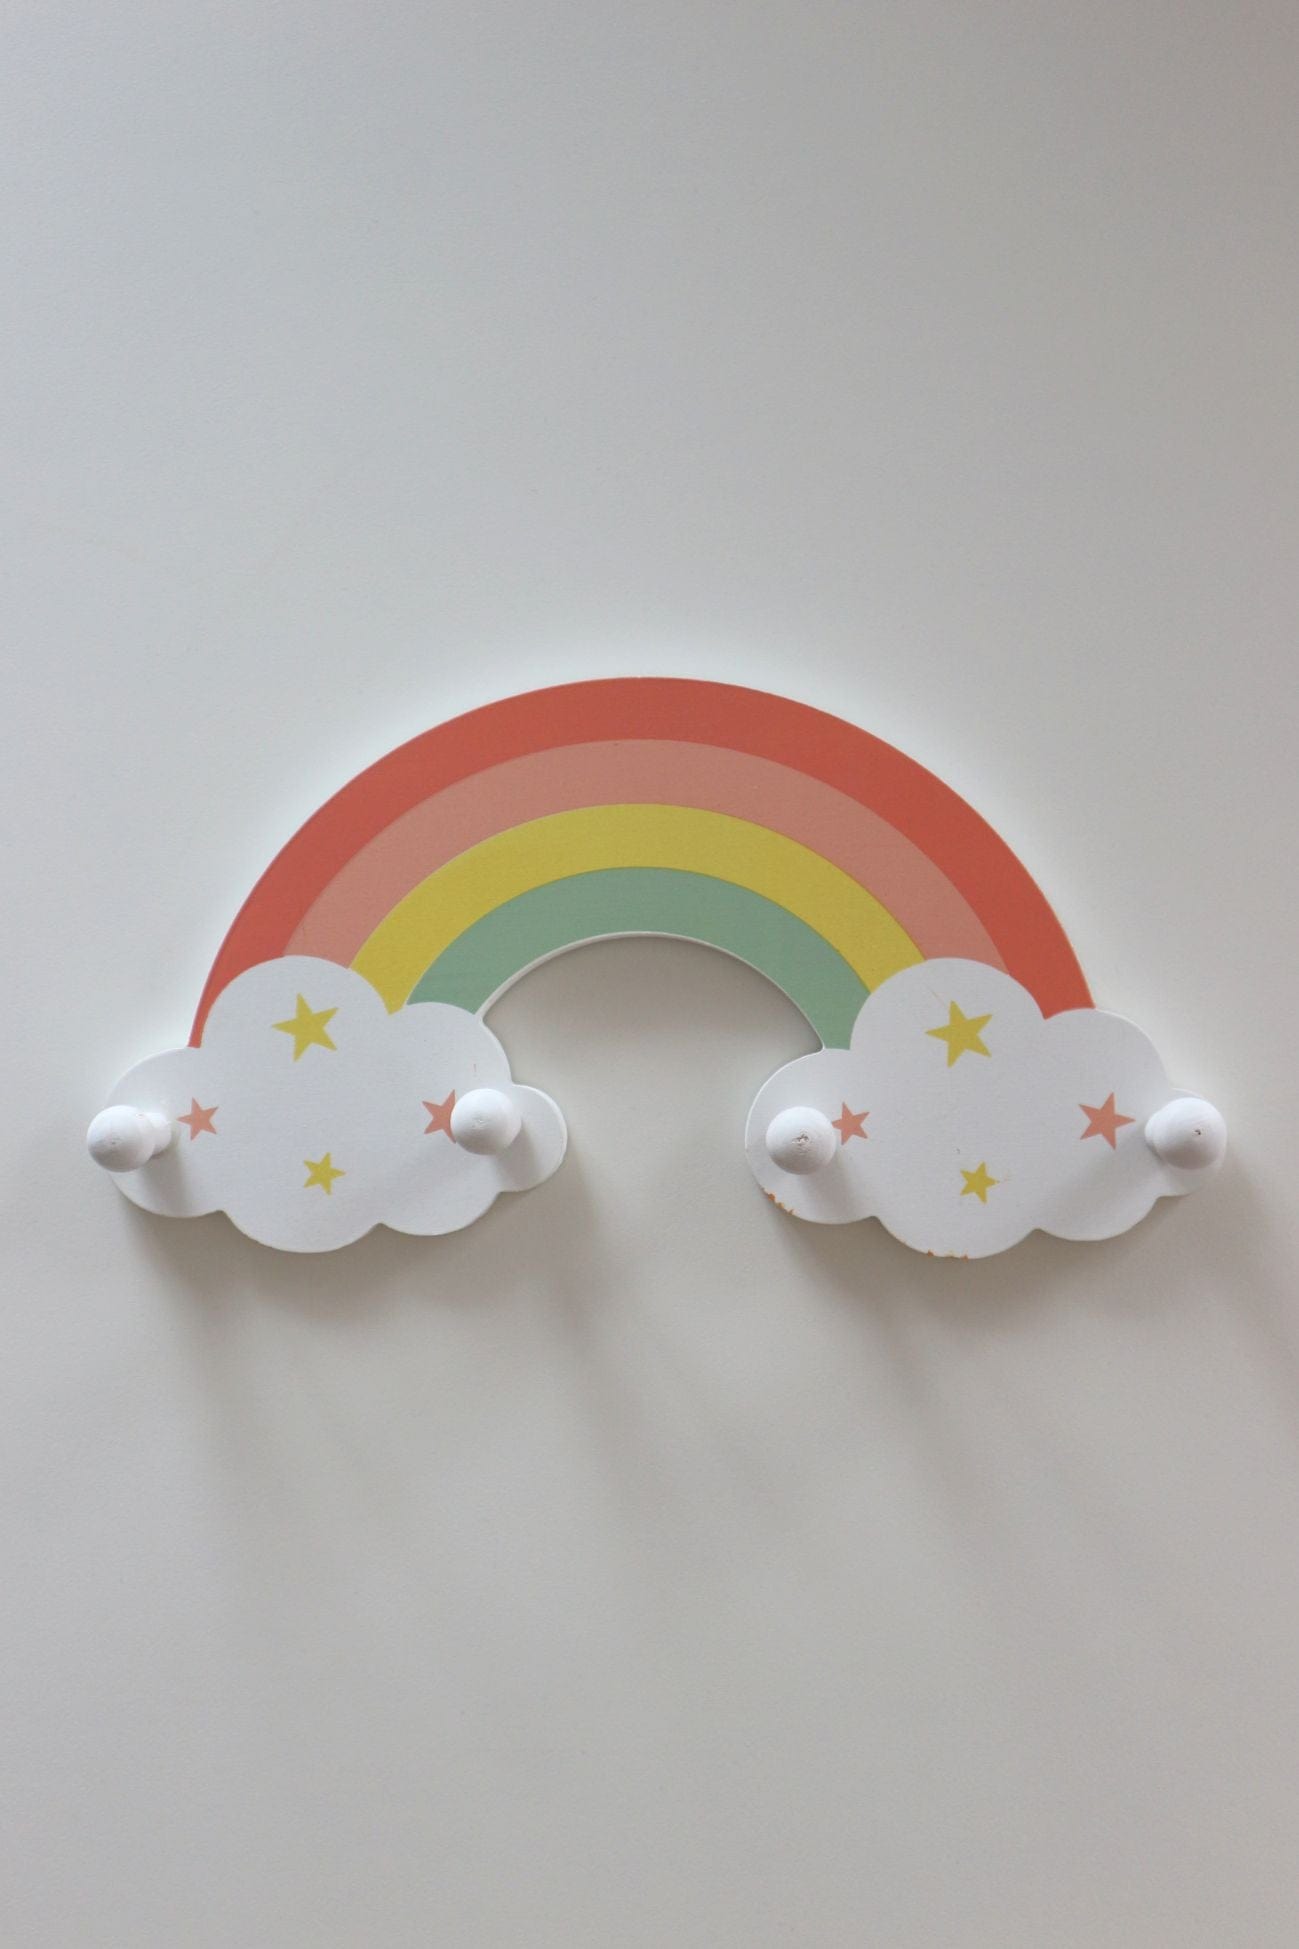 Item International Rainbow Rainbow - Appendiabiti in legno con fantasia arcobaleno | Item International